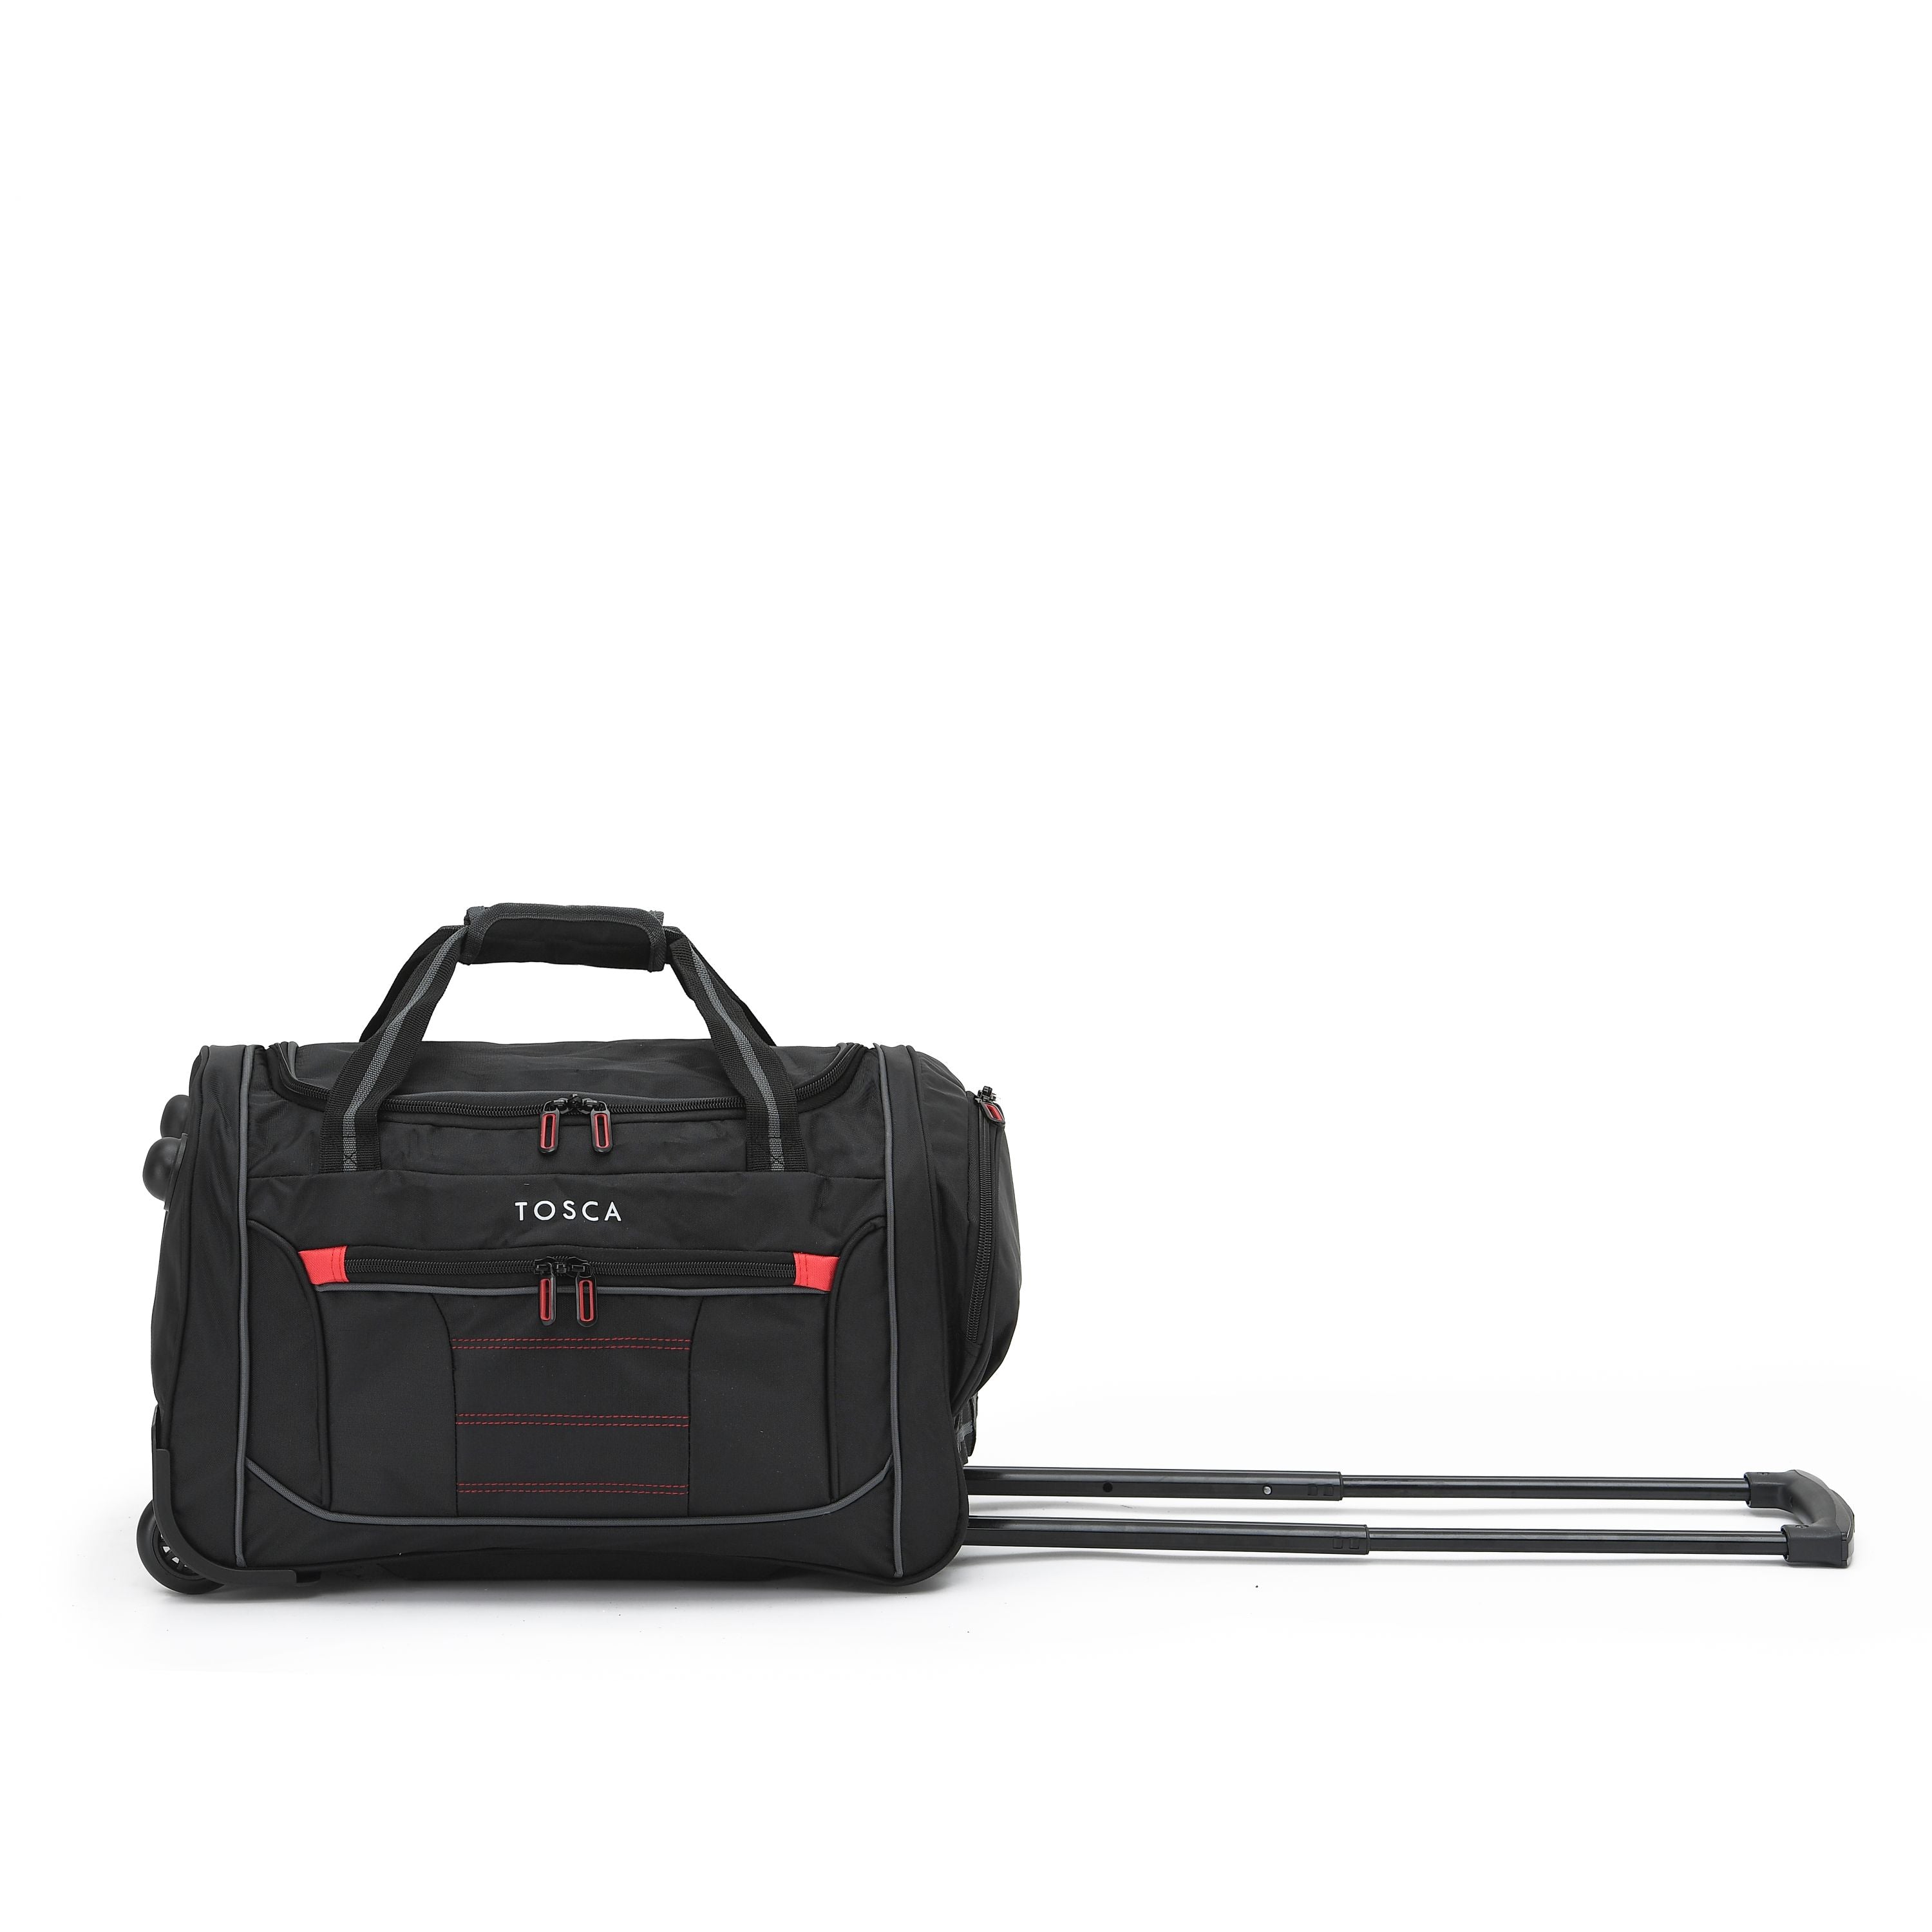 Tosca - TCA794TW/SA 48cm Small Wheeled Duffle Bag - Black/Red-1